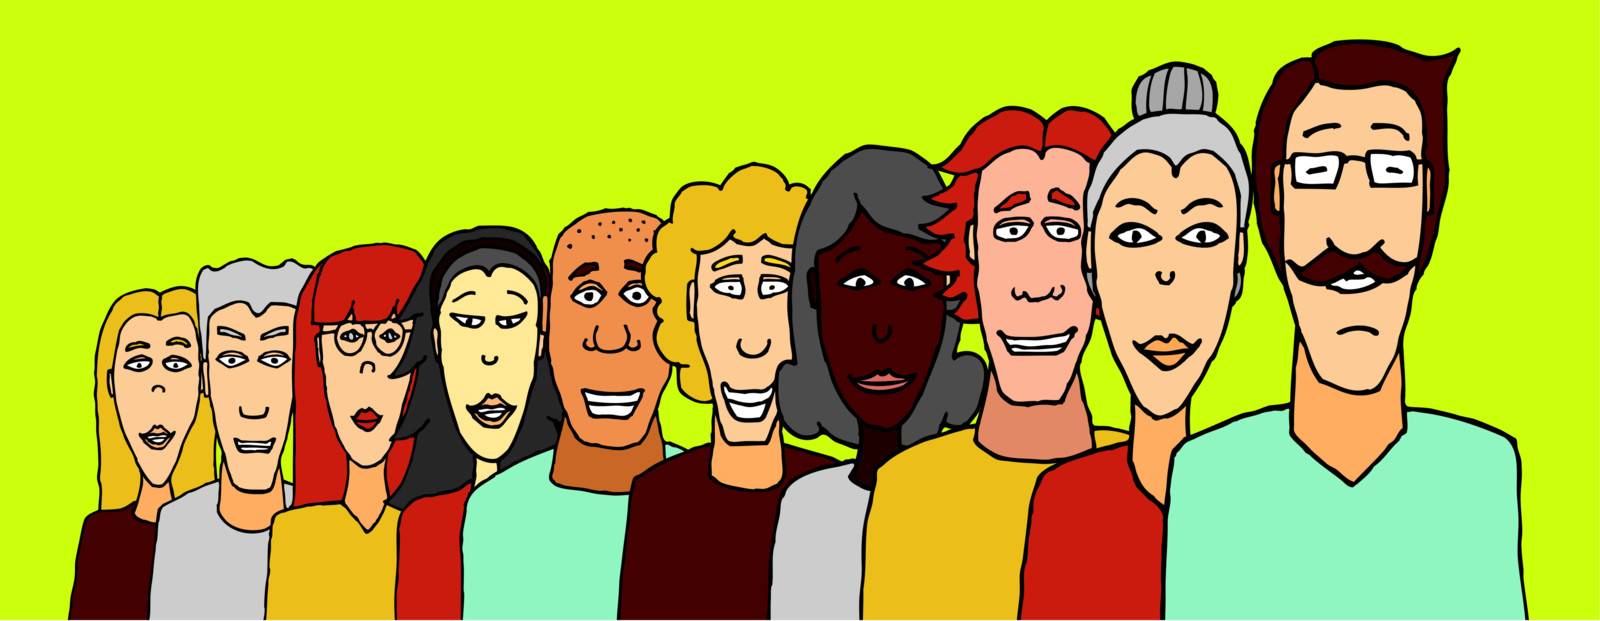 Teamwork diversity / Ethnic variation group by curvabezier